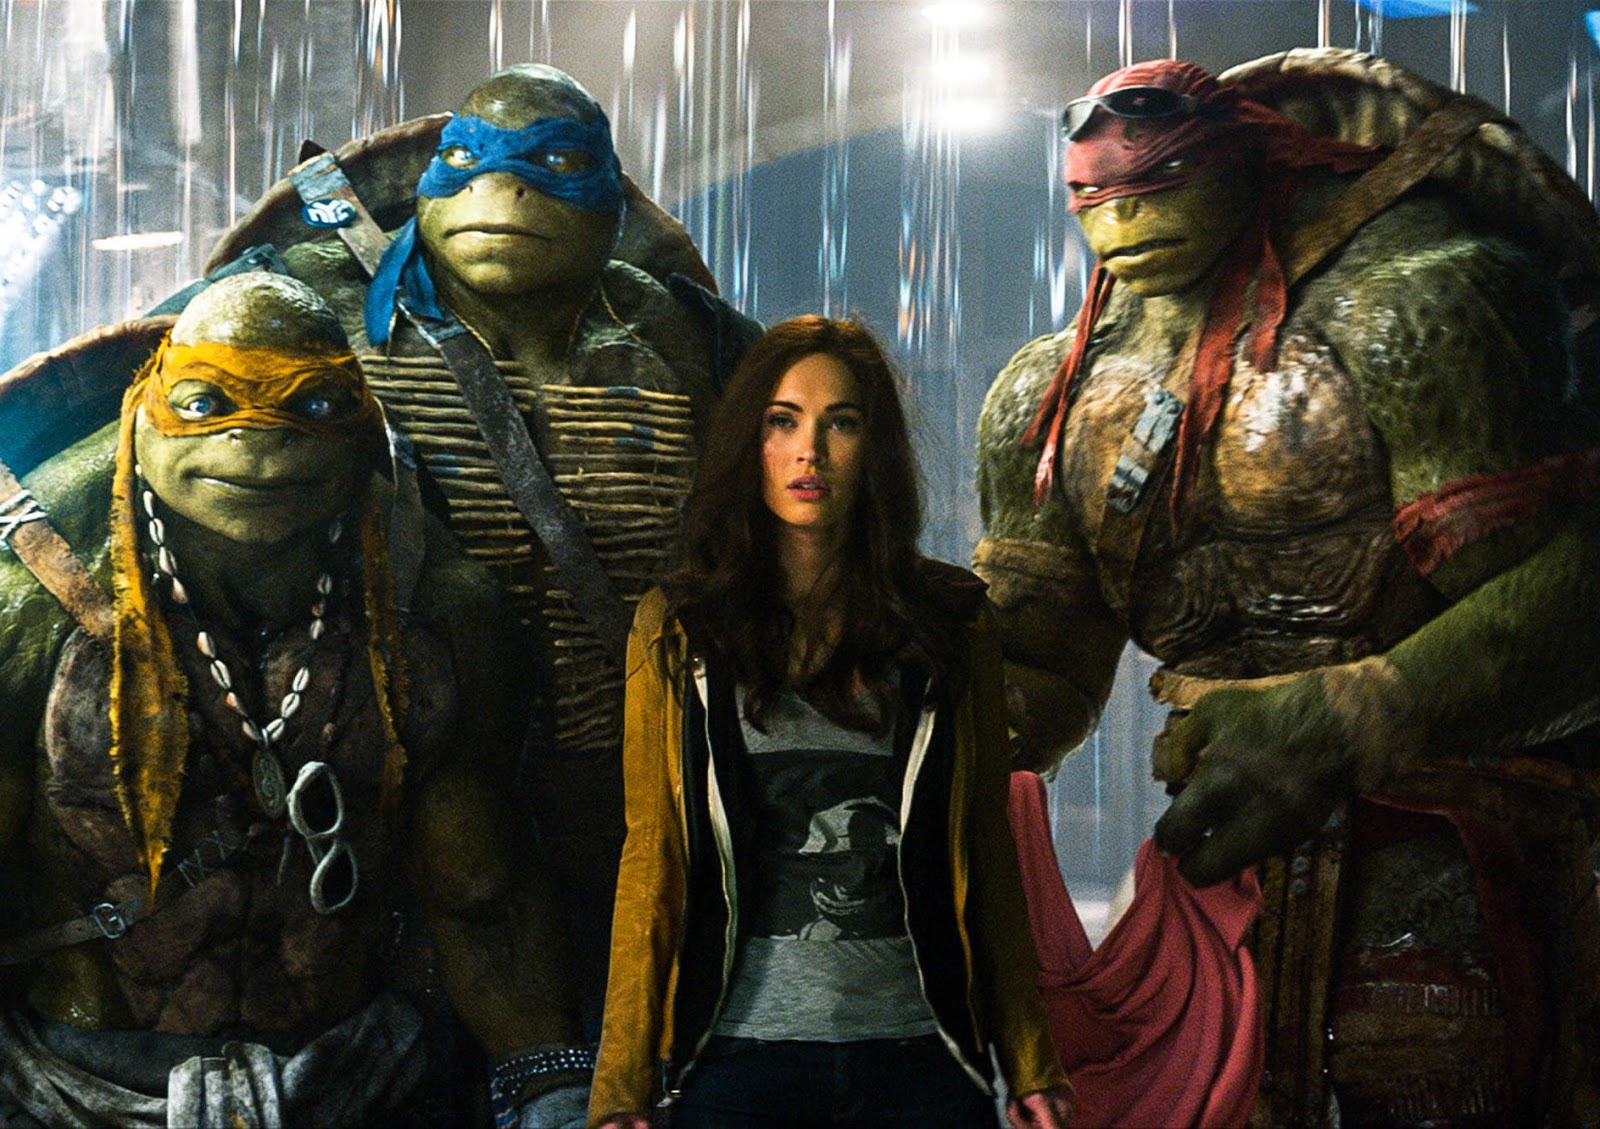 Teenage Mutant Ninja Turtles' releases second official trailer 